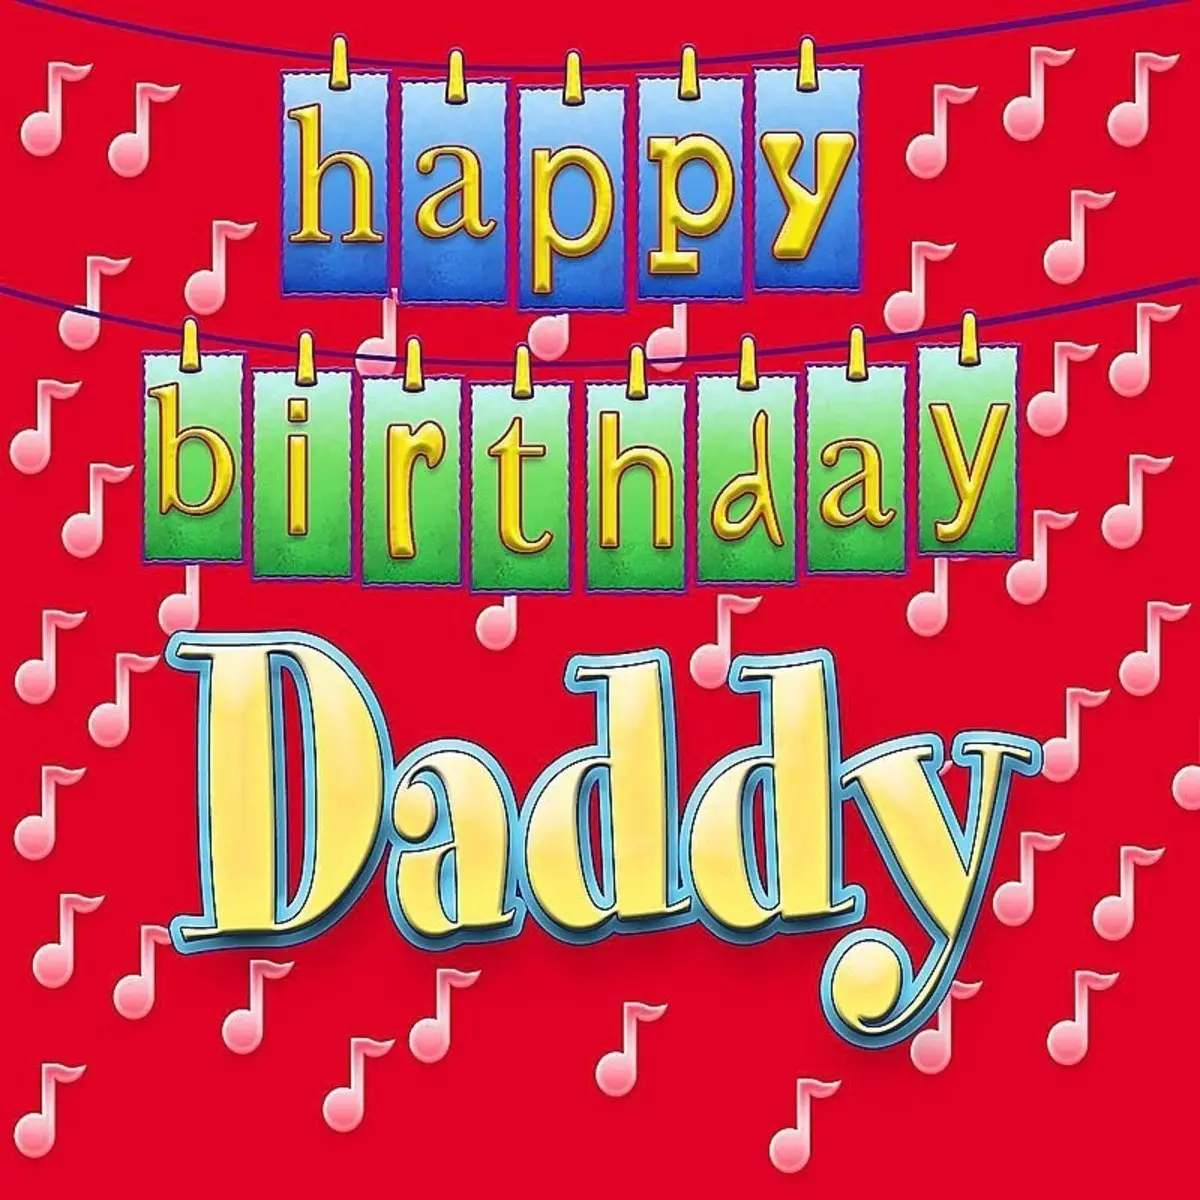 Happy Birthday Daddy Mp3 Song Download Happy Birthday Daddy Happy